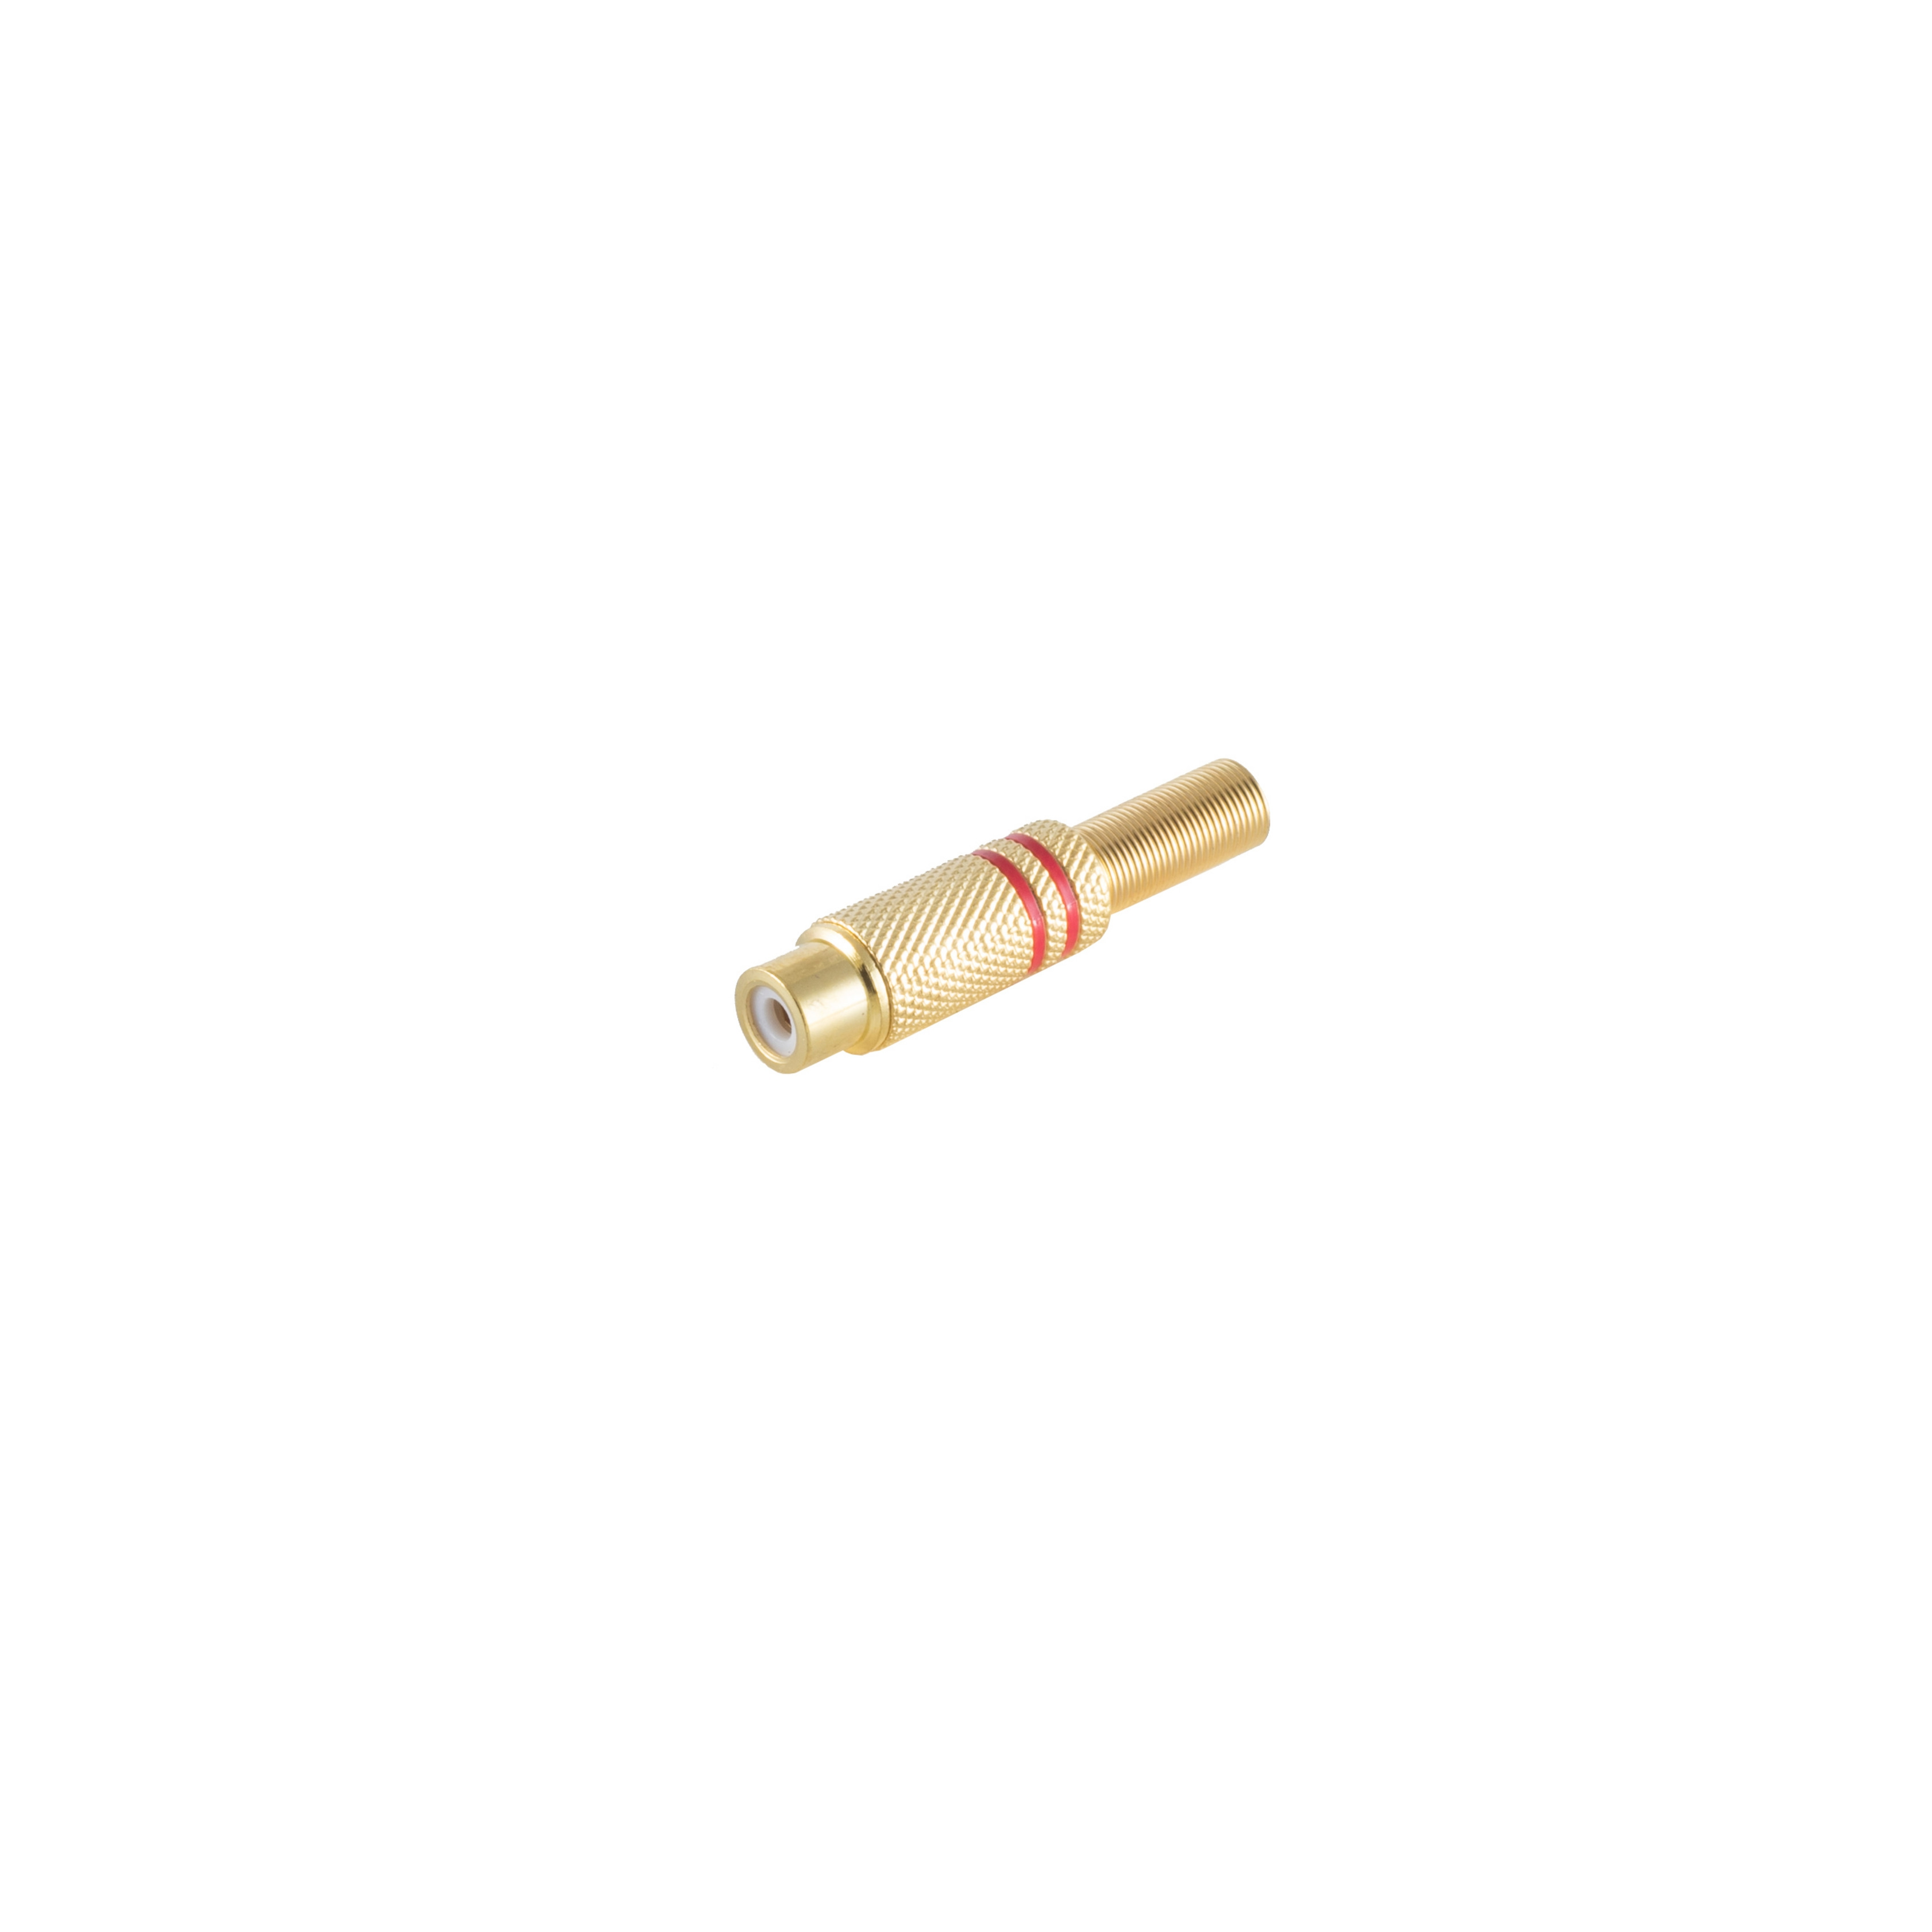 S/CONN MAXIMUM Cinchkupplung vergoldet, rot Metall Cinch CONNECTIVITY 6mm